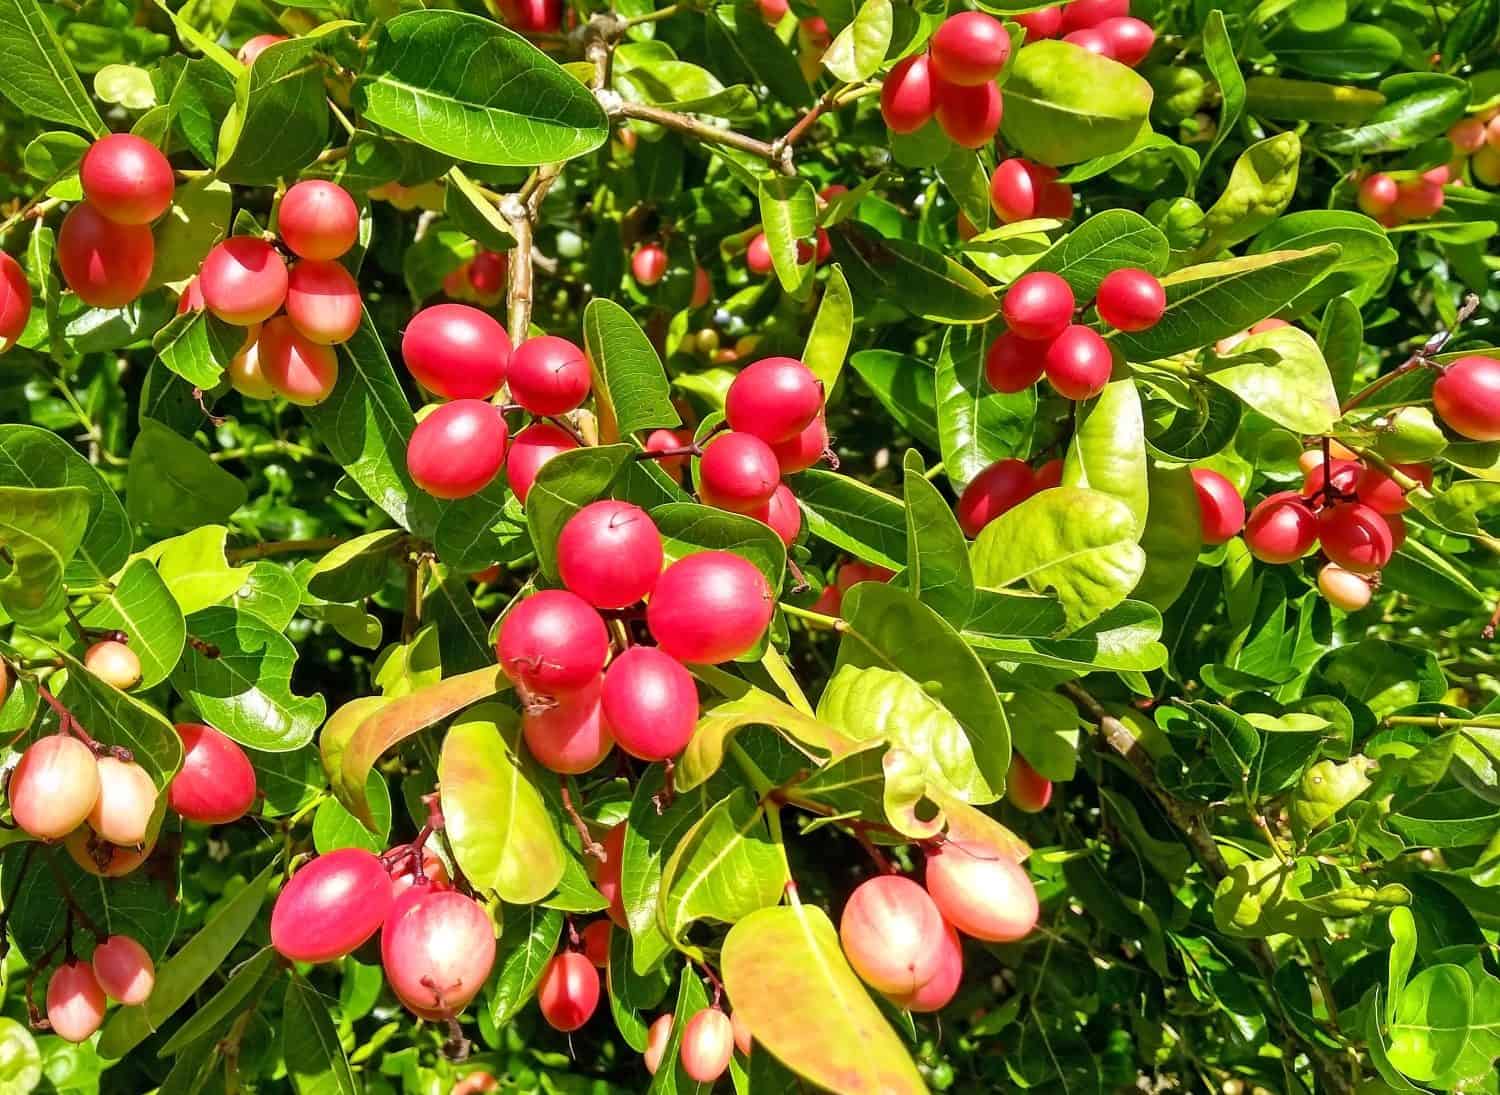 Abundance of bunches of bright red berries growing on a Bengal currant plant (Carissa carandas), also known as, Christ's thorn, carandas plum, karonda and karanda.